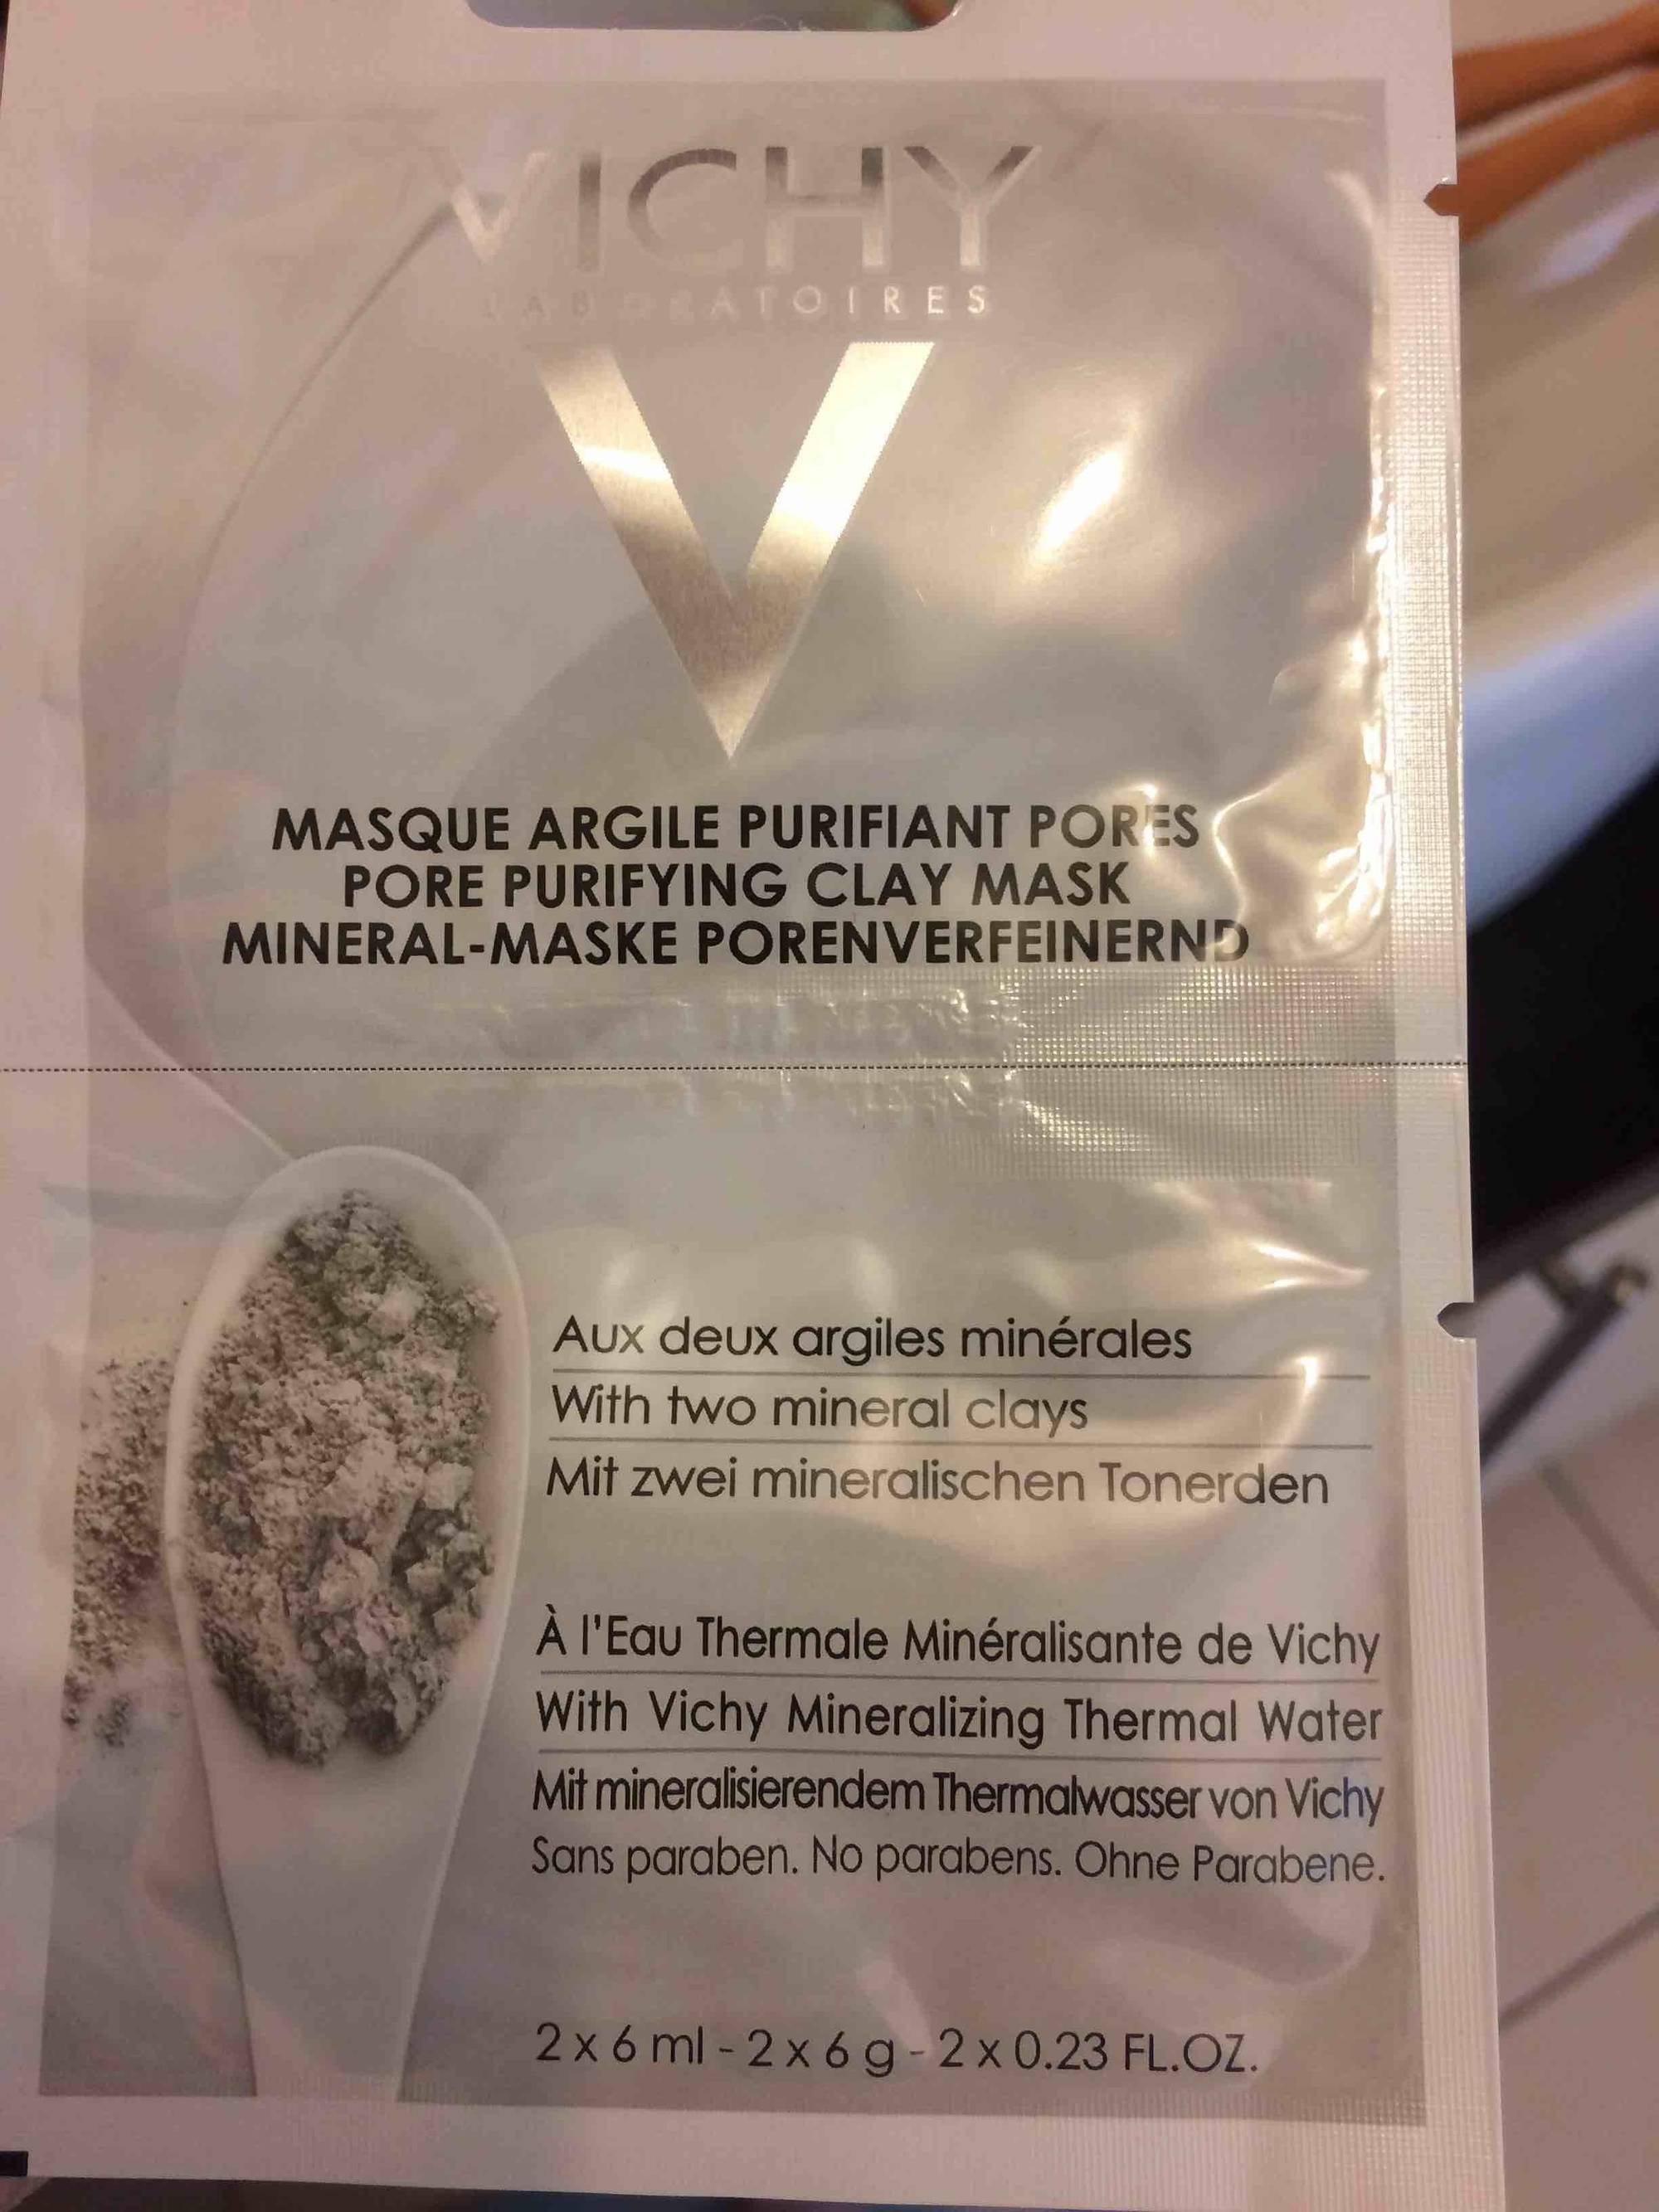 VICHY - Masque argile purifiant pores